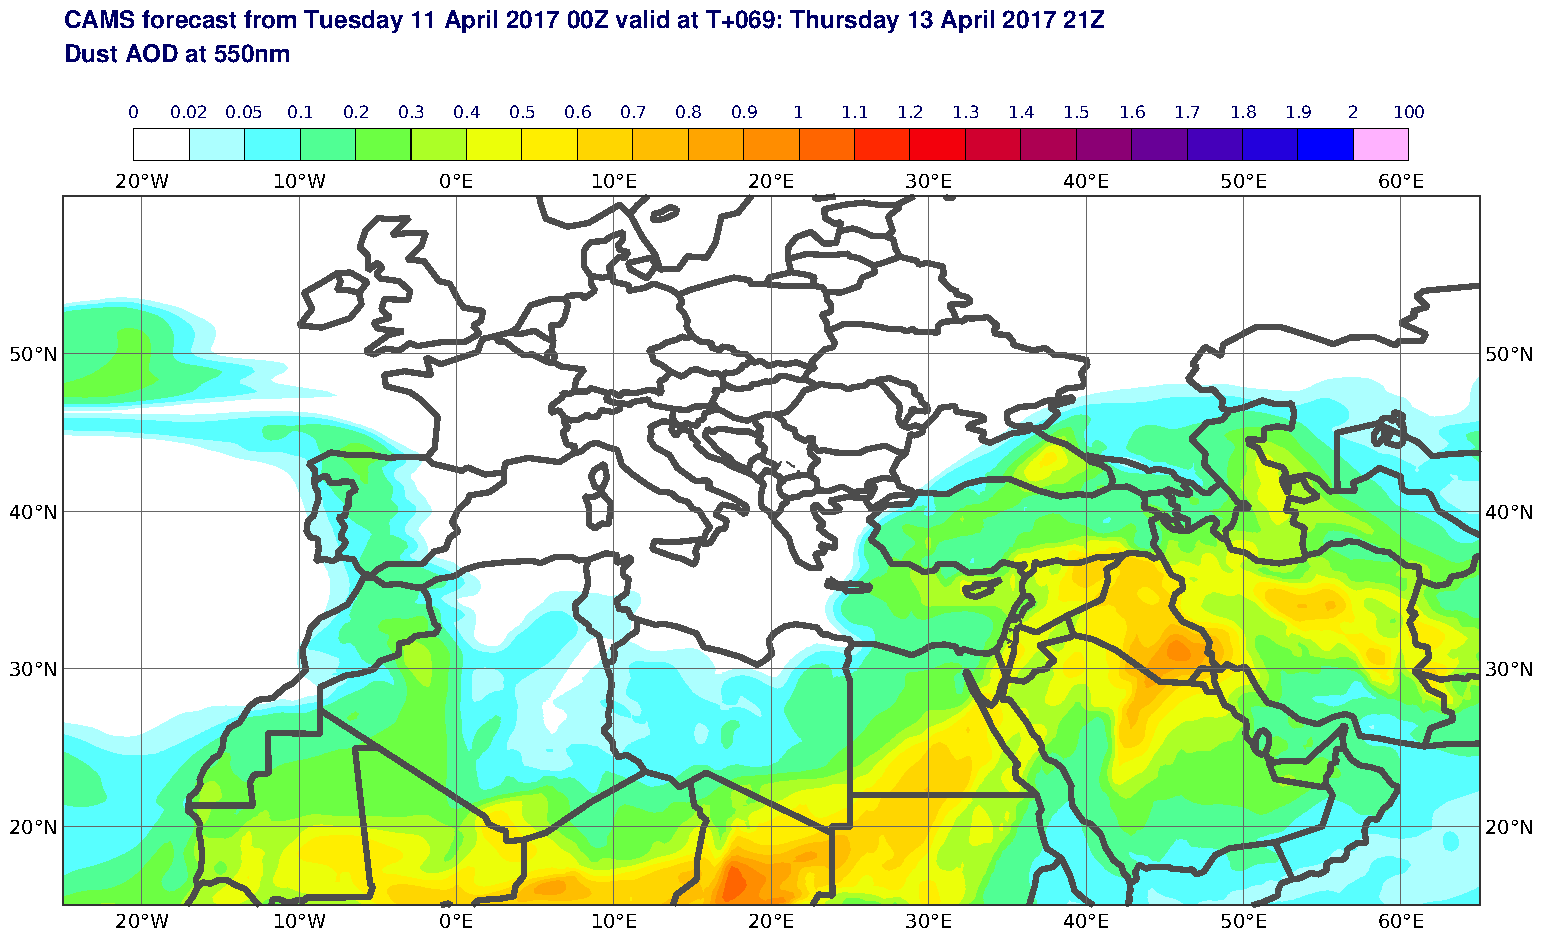 Dust AOD at 550nm valid at T69 - 2017-04-13 21:00